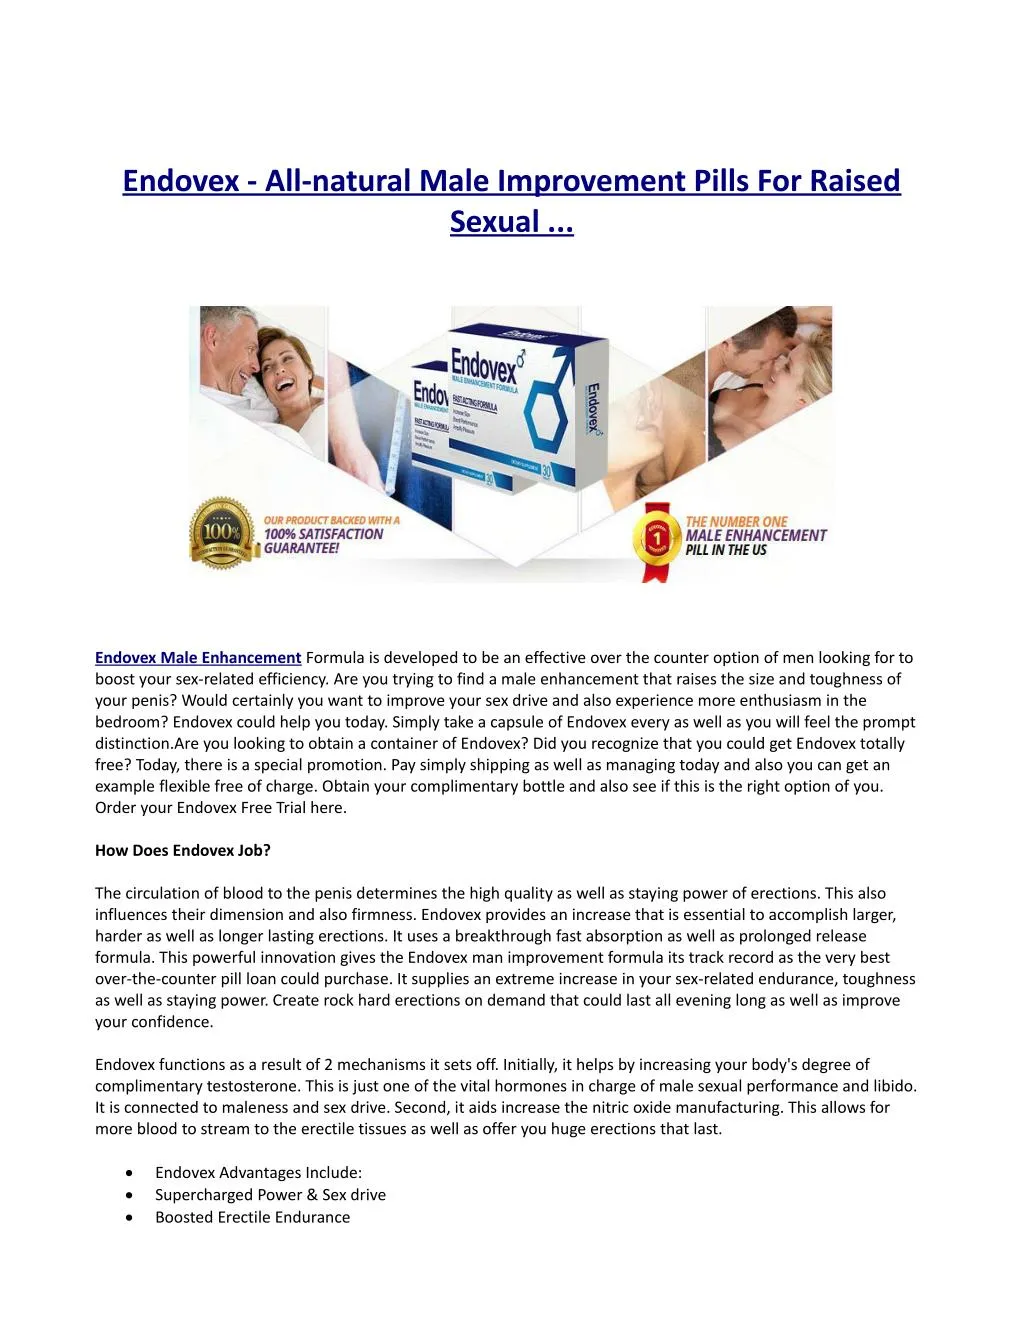 endovex all natural male improvement pills